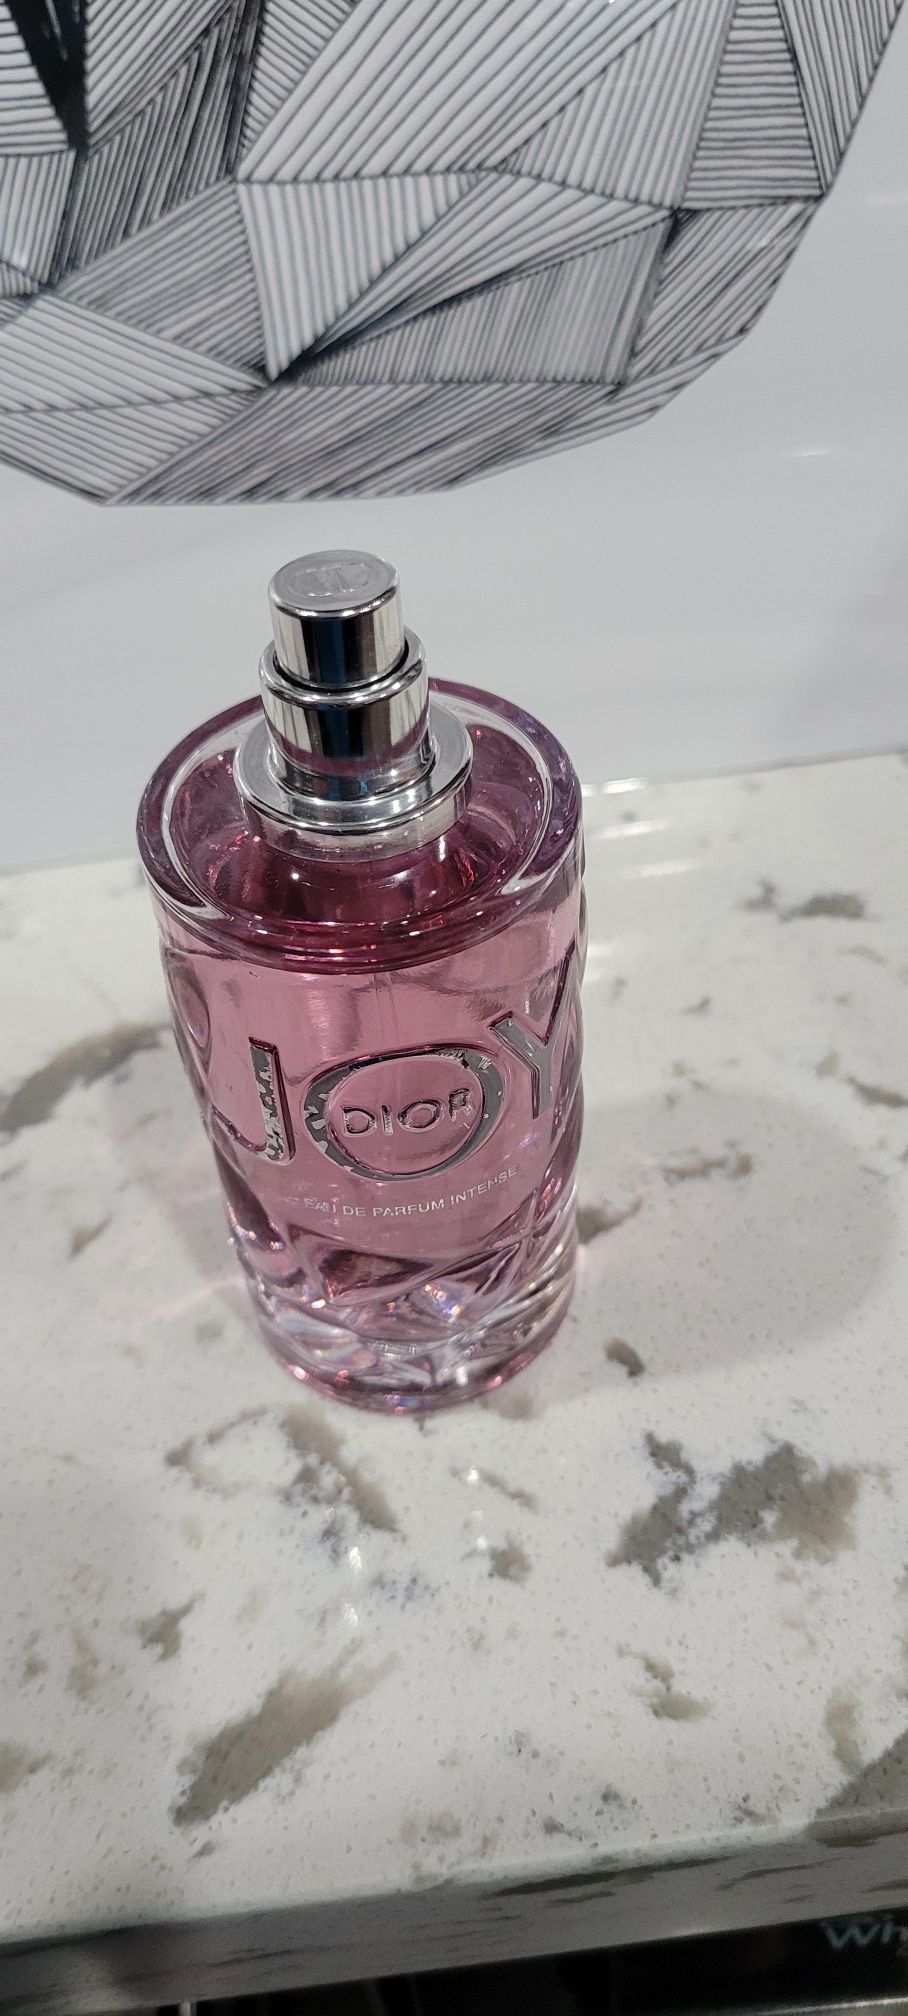 Dior Joy Intense 3 oz perfume